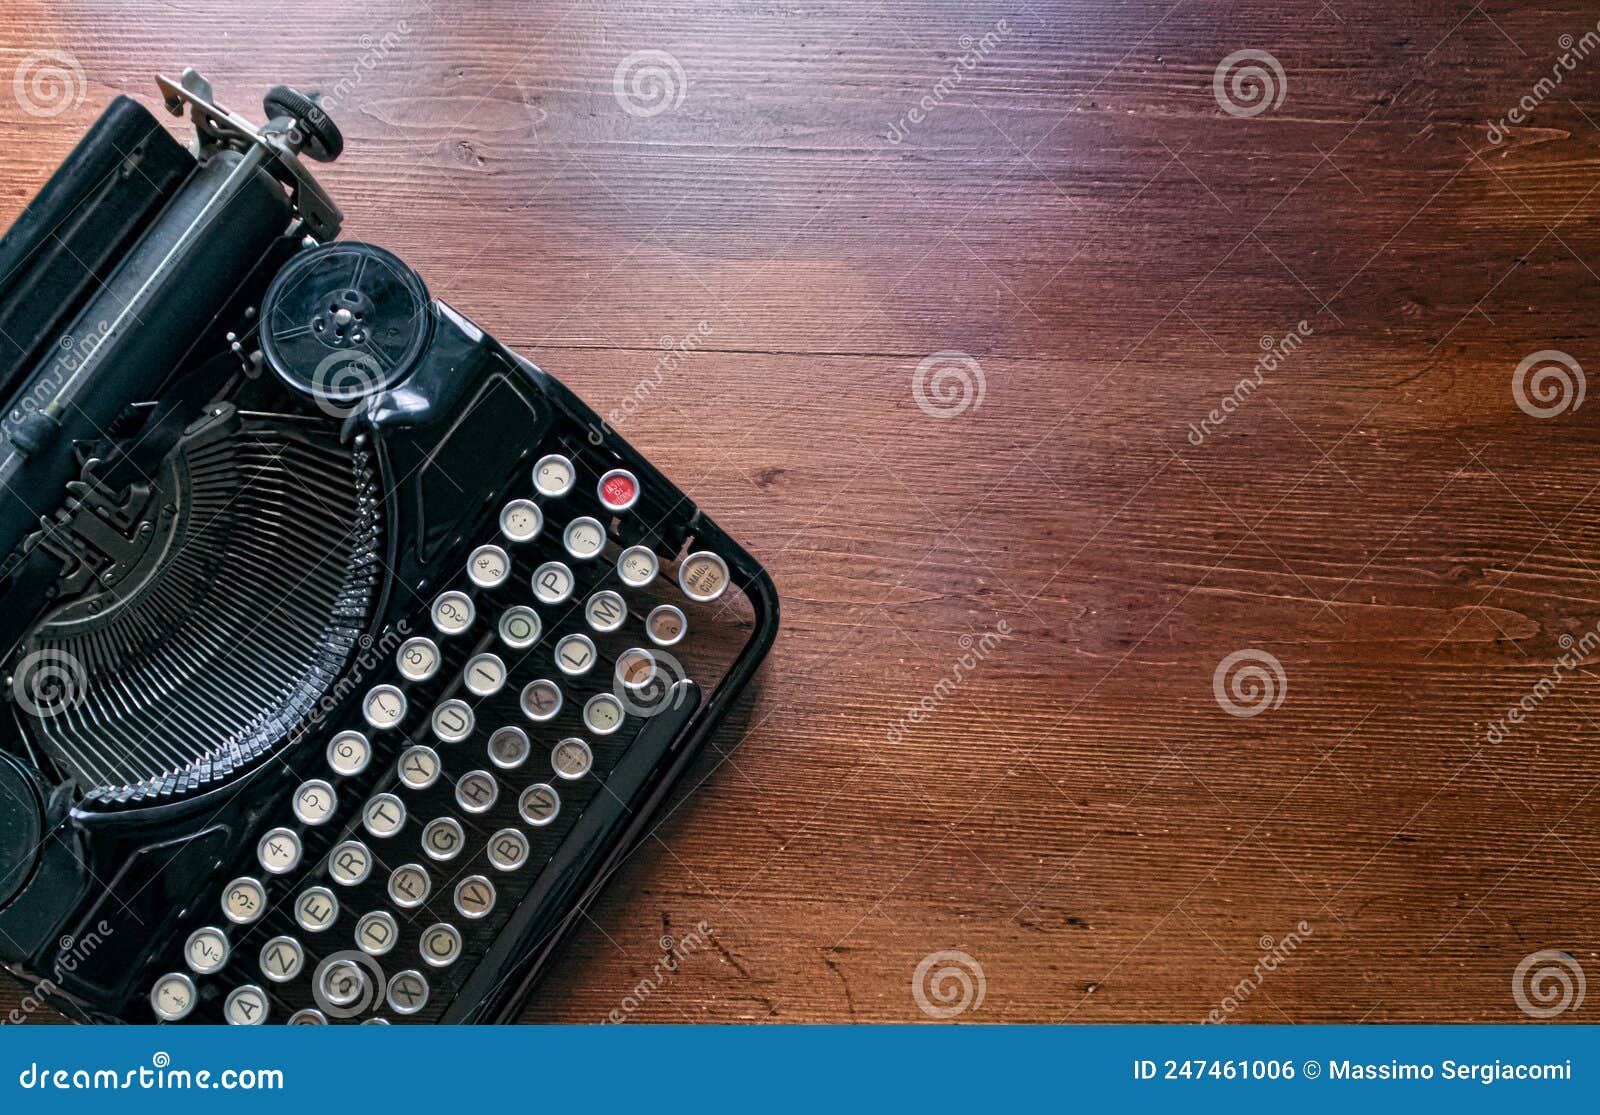 ancient typewriter on vintage background